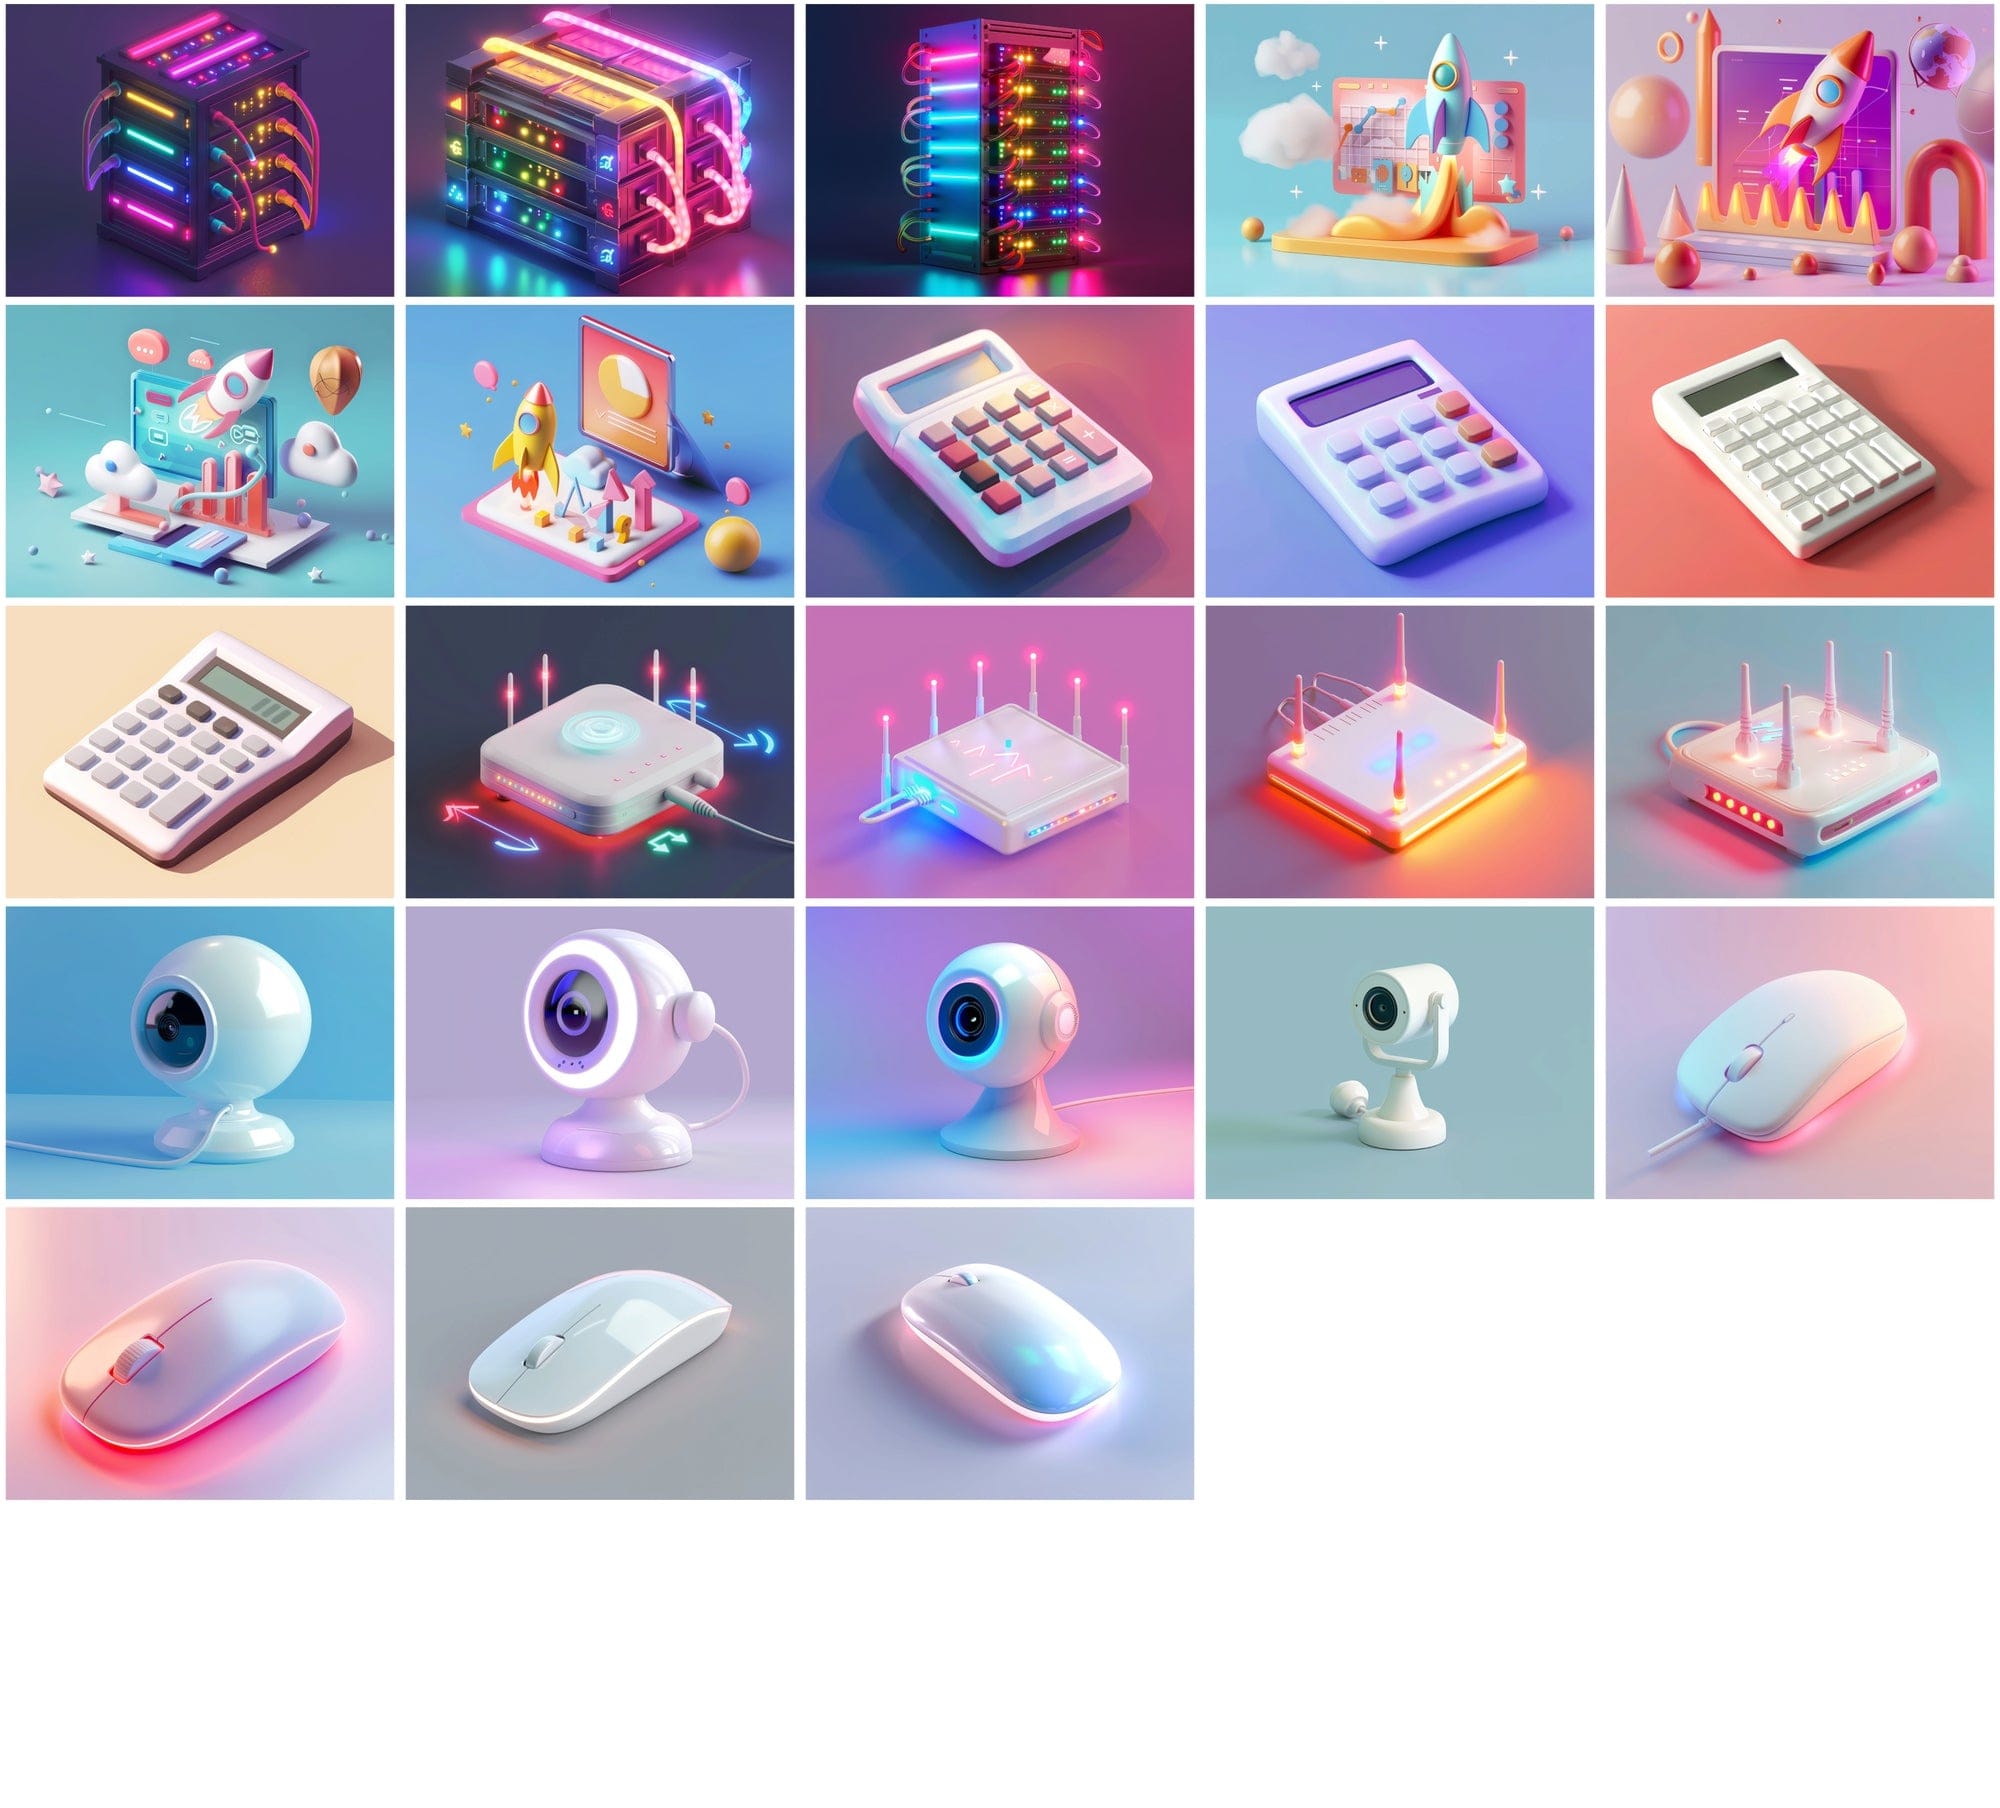 400 Tech-Themed Illustrations for Designers & Creators Digital Download Sumobundle